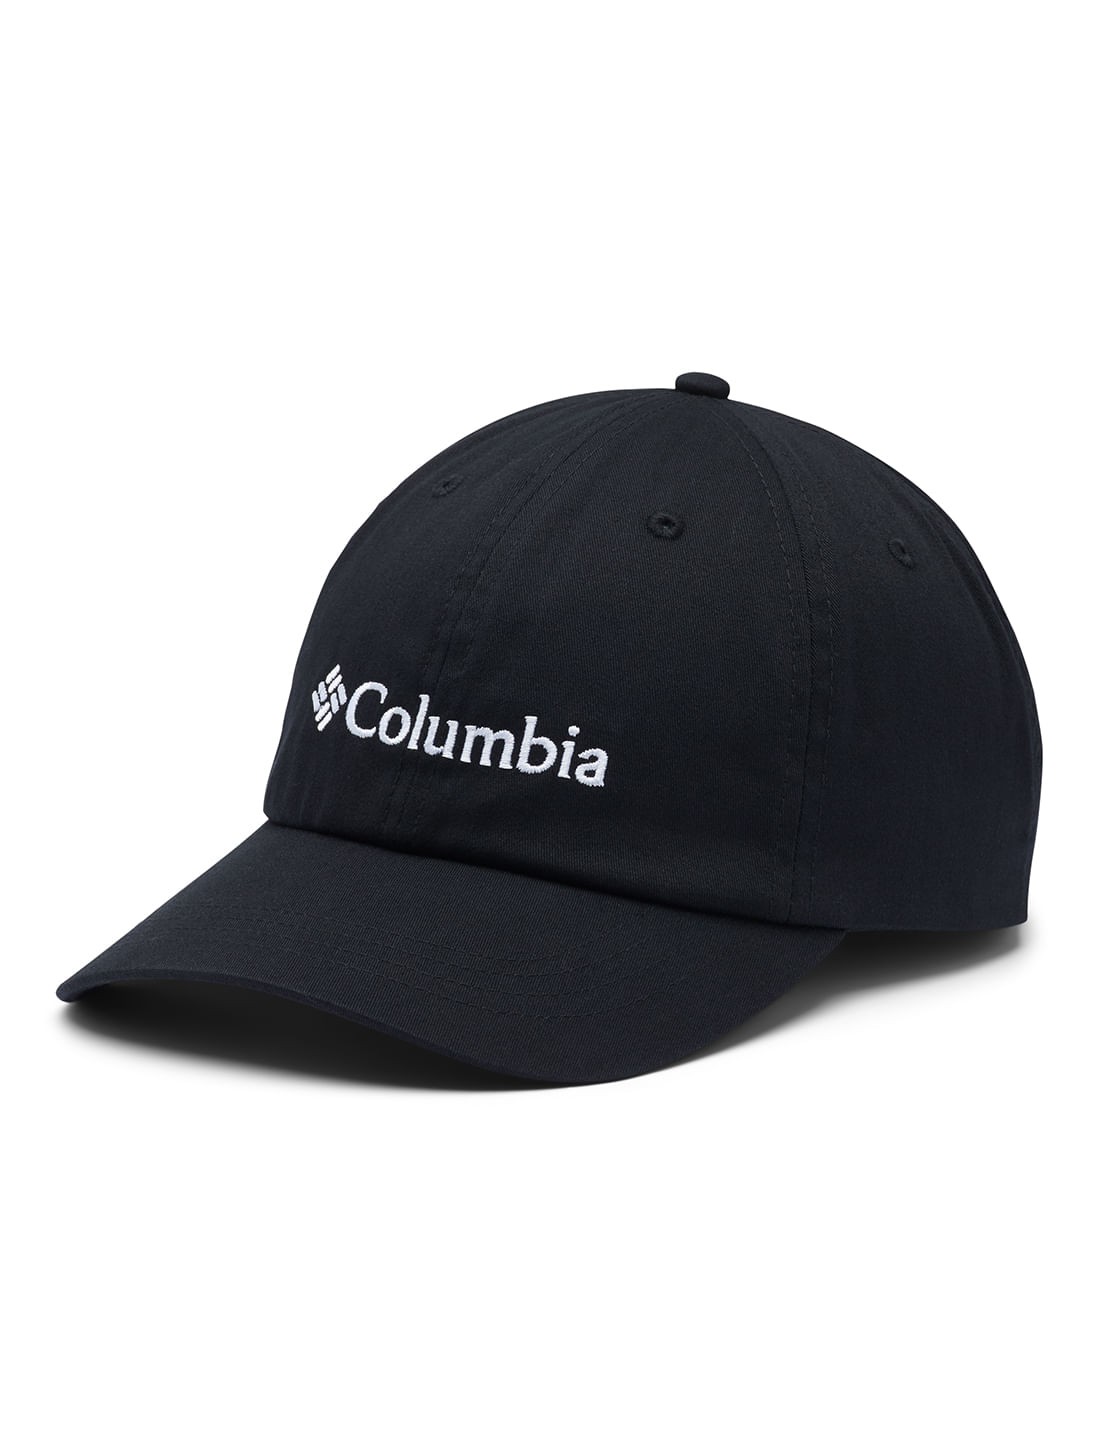 Boné Columbia Roc II Hat - Preto